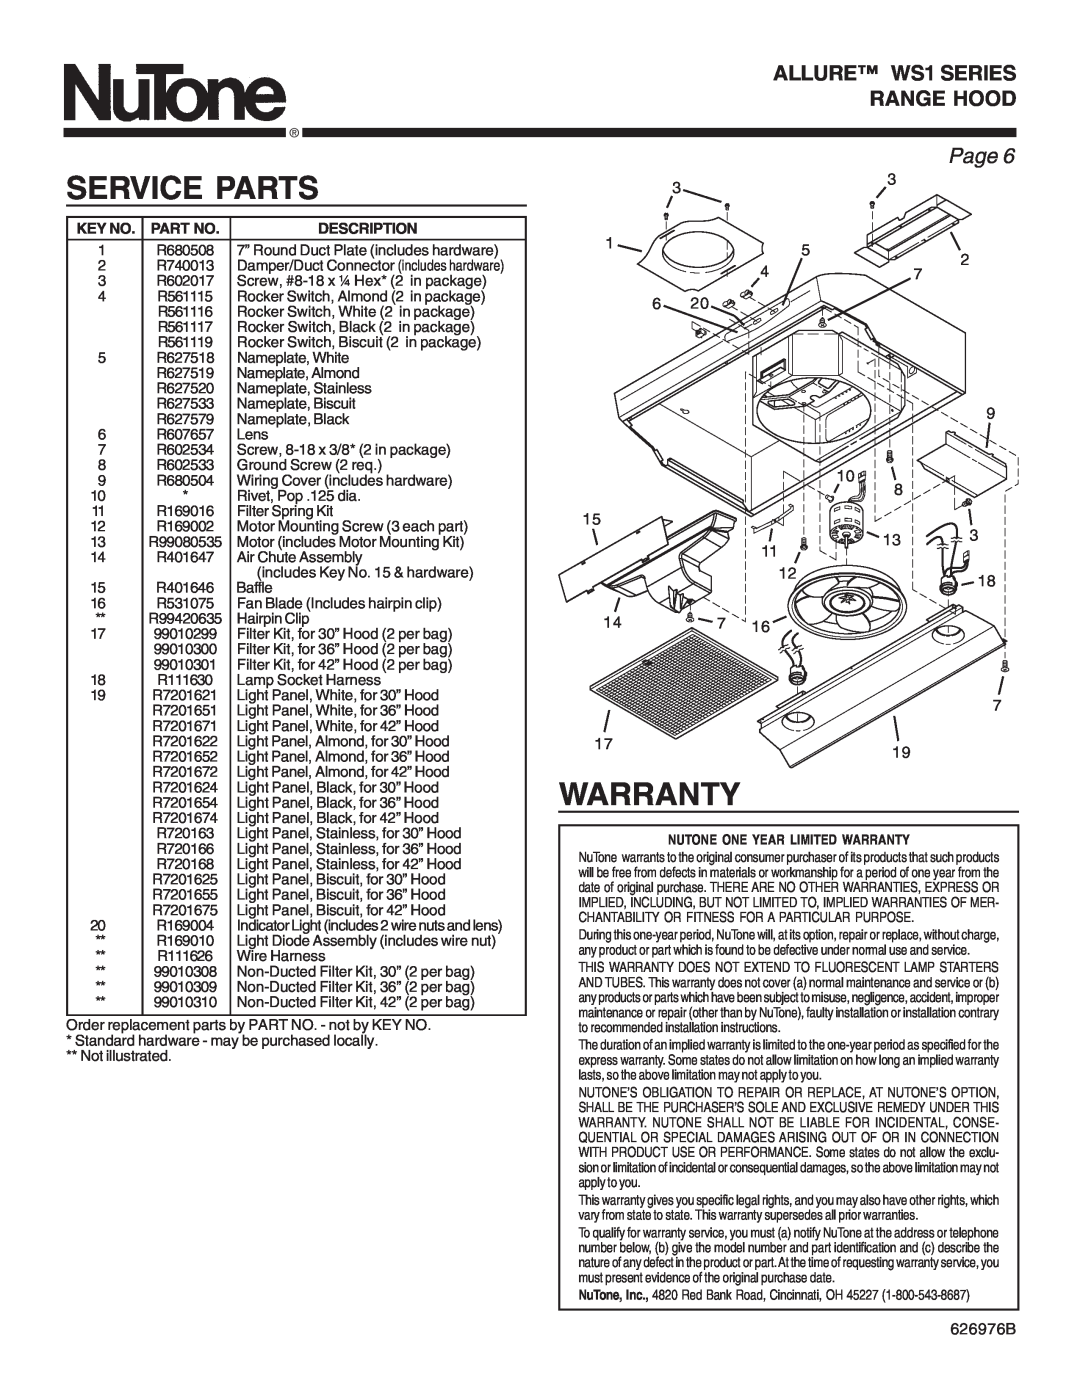 NuTone warranty Service Parts, Warranty, ALLURE WS1 SERIES RANGE HOOD, Page, 626976B 